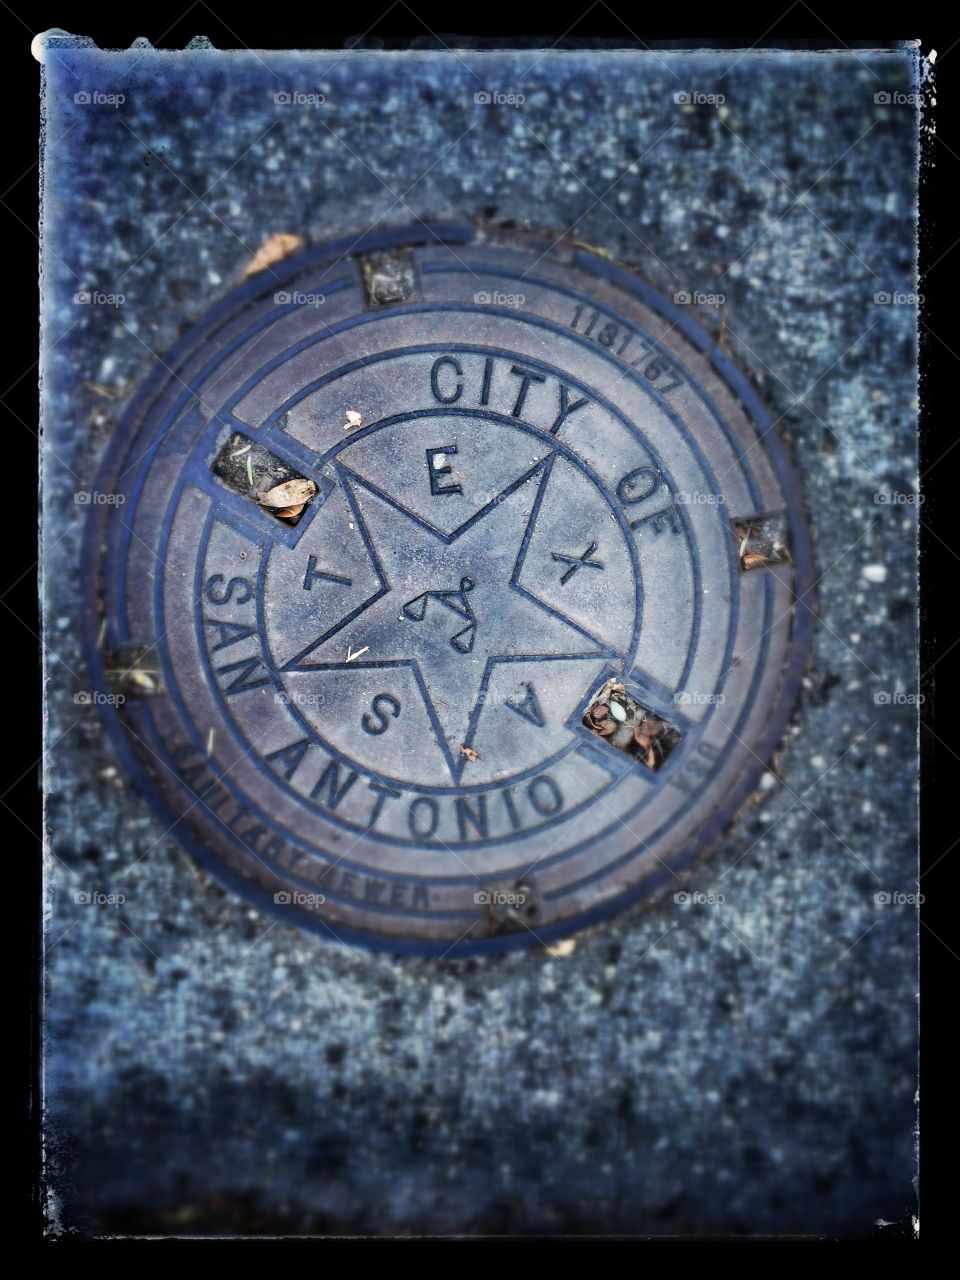 San Antonio Texas manhole cover